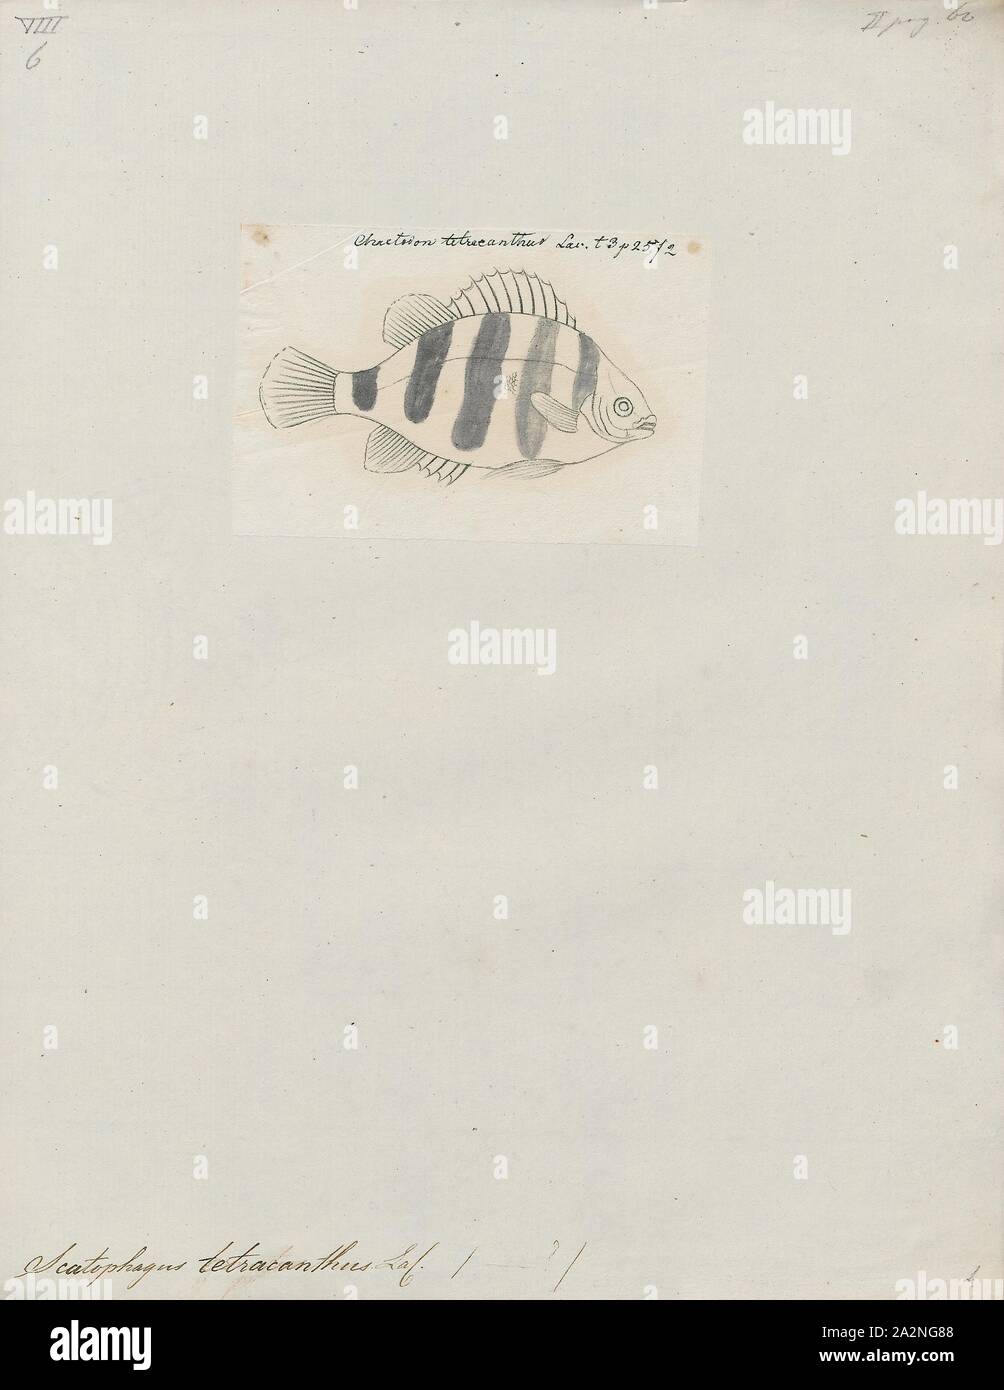 Scatophagus tetracanthus, Print, Scatty, 1700-1880 Stock Photo